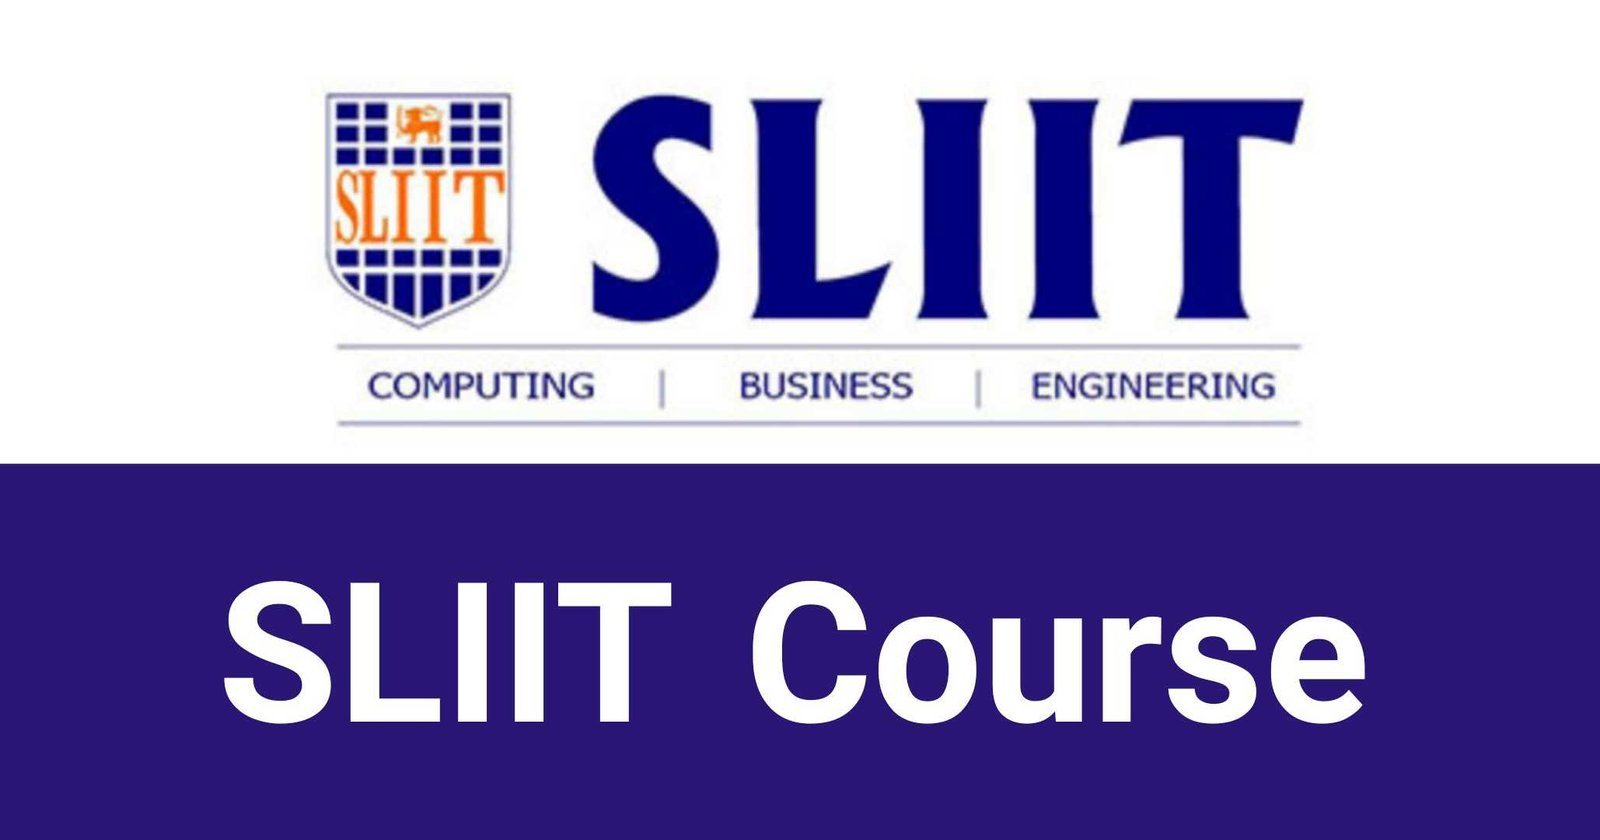 Sri Lanka Institute of Information Technology (SLIIT) Courses Applications